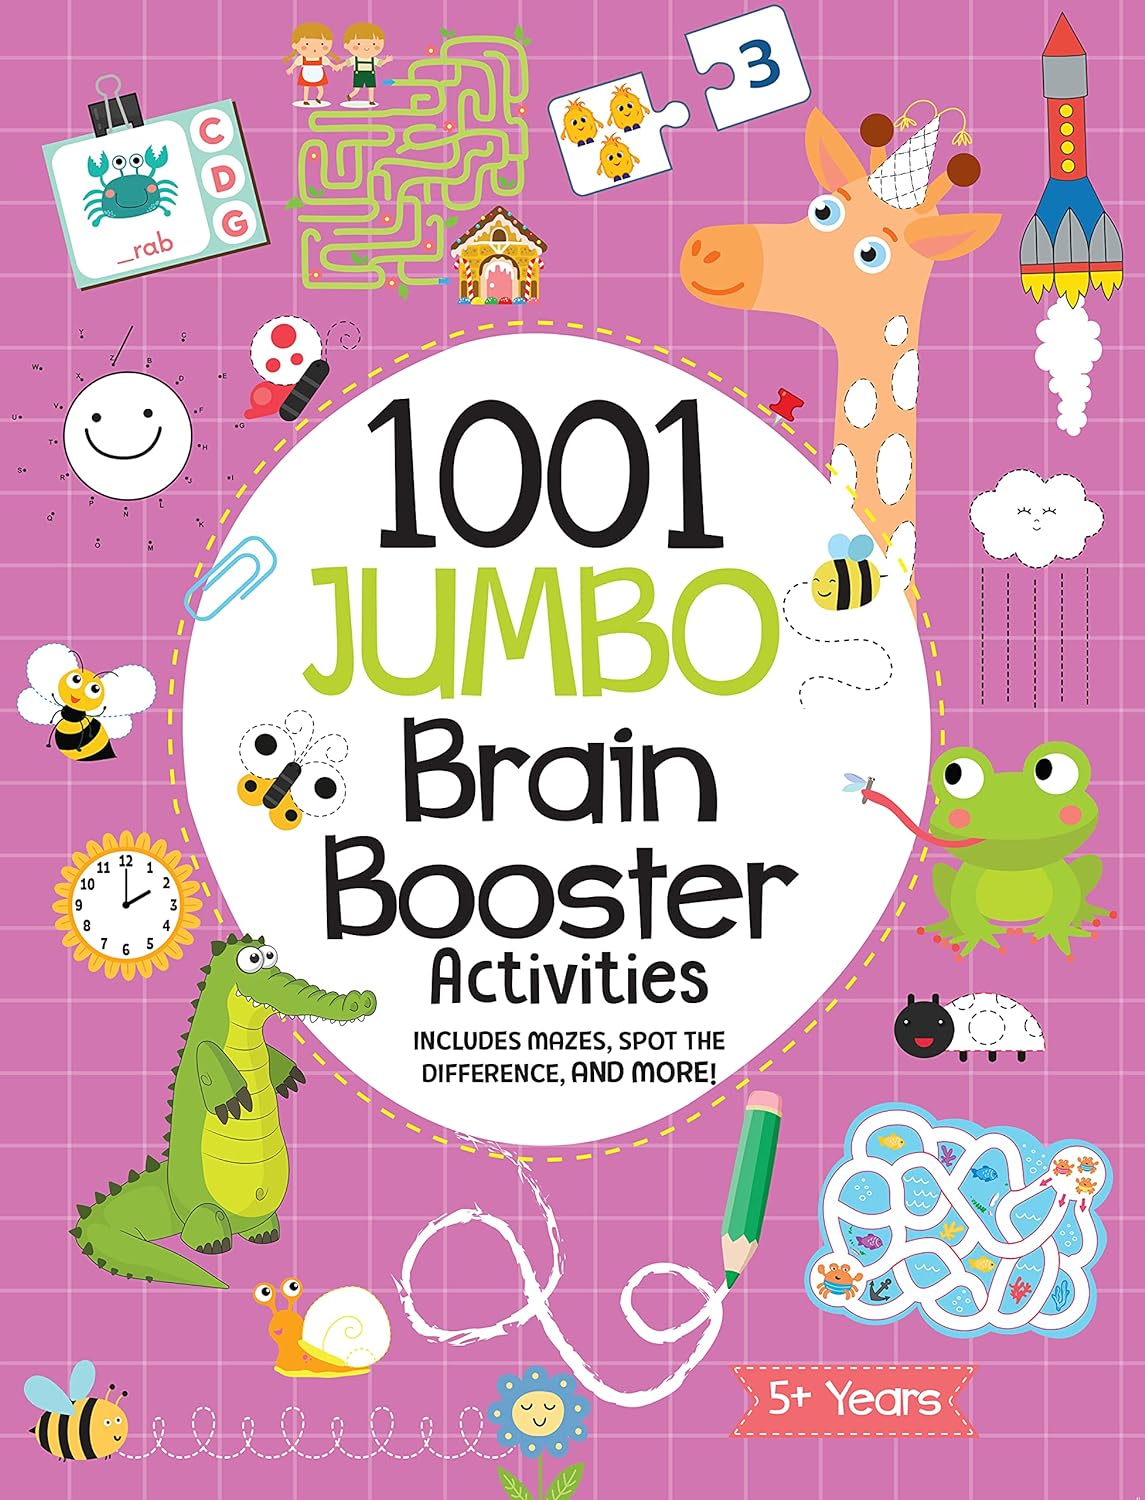 Pegasus 1001 Jumbo Brain Booster Activities for 5 to 8 Years Old Kids